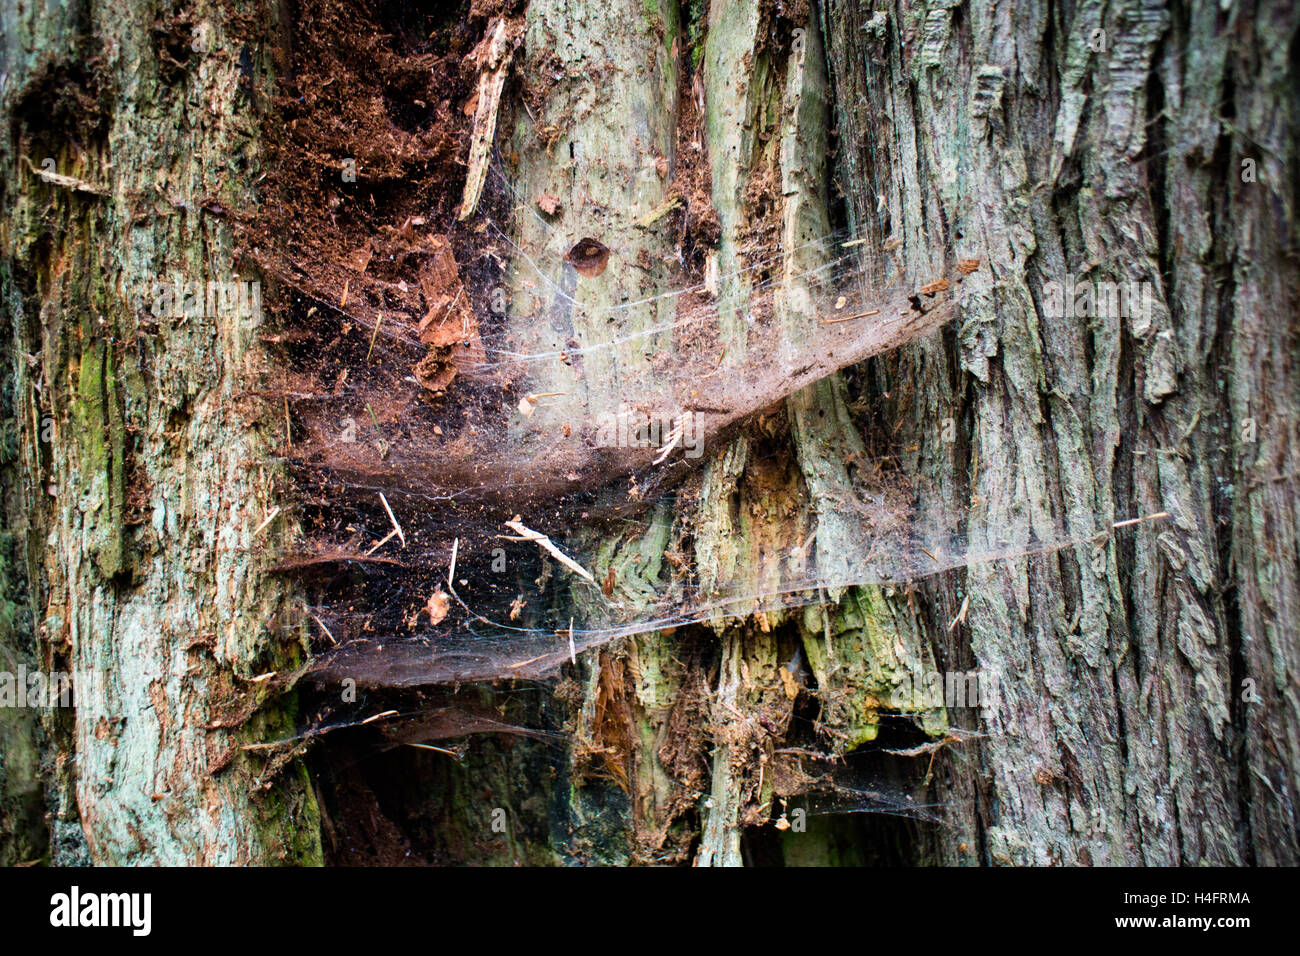 Cob webs going across the tree bark, nature inspiration on Vancouver Island Stock Photo